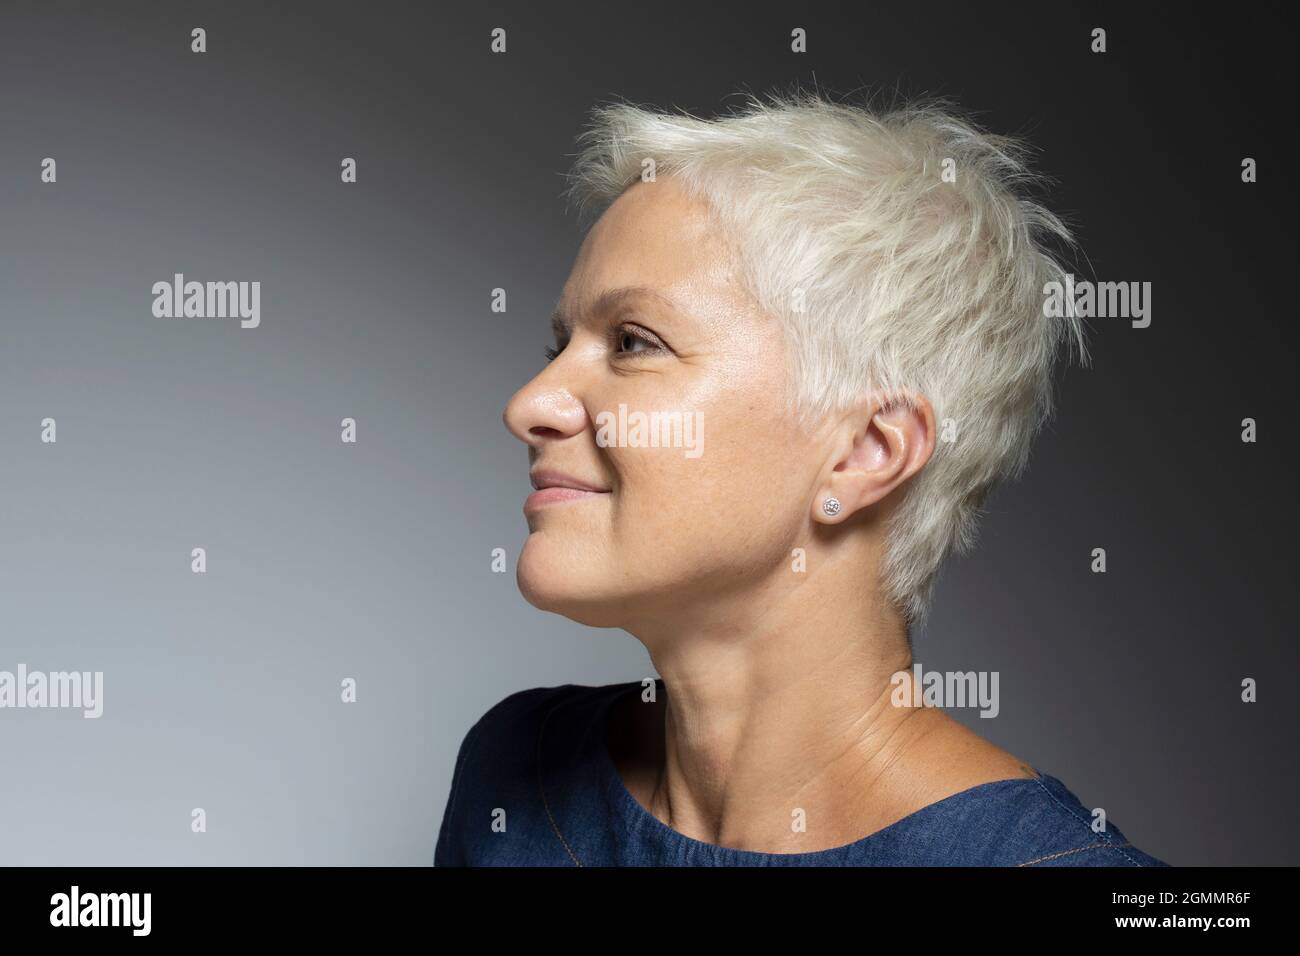 Profilportrait schöne reife Frau mit kurzen weißen Haaren Stockfoto